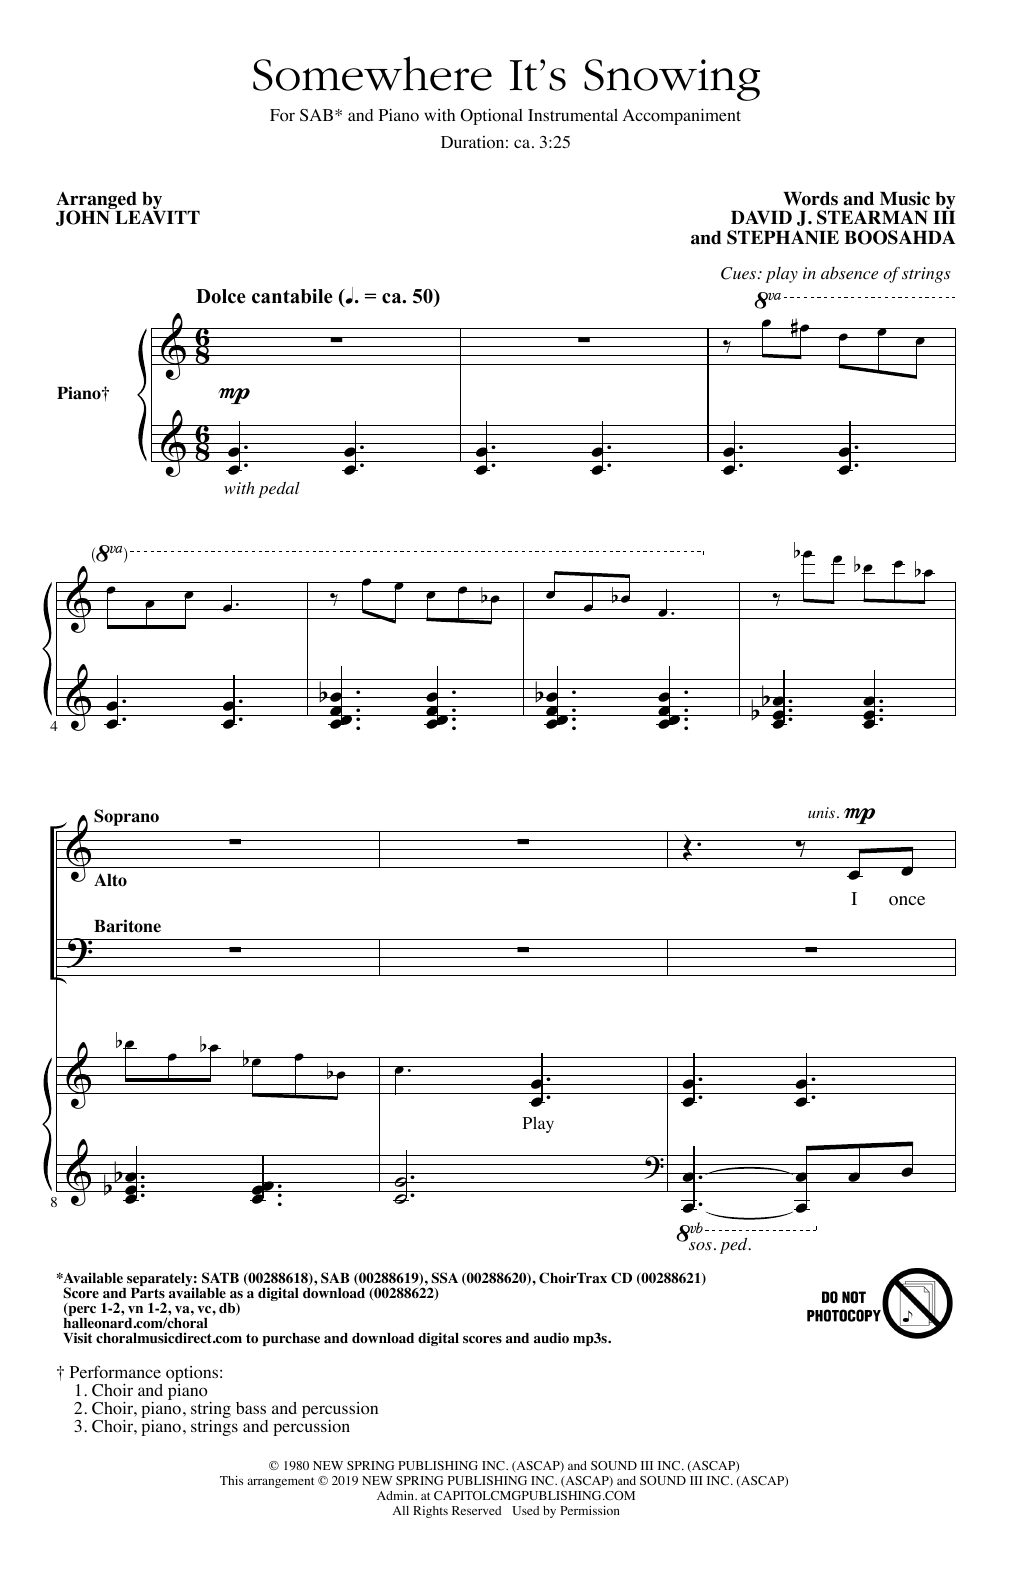 Download David J. Stearman III & Stephanie Boosahda Somewhere It's Snowing (arr. John Leavitt) Sheet Music and learn how to play SSA Choir PDF digital score in minutes